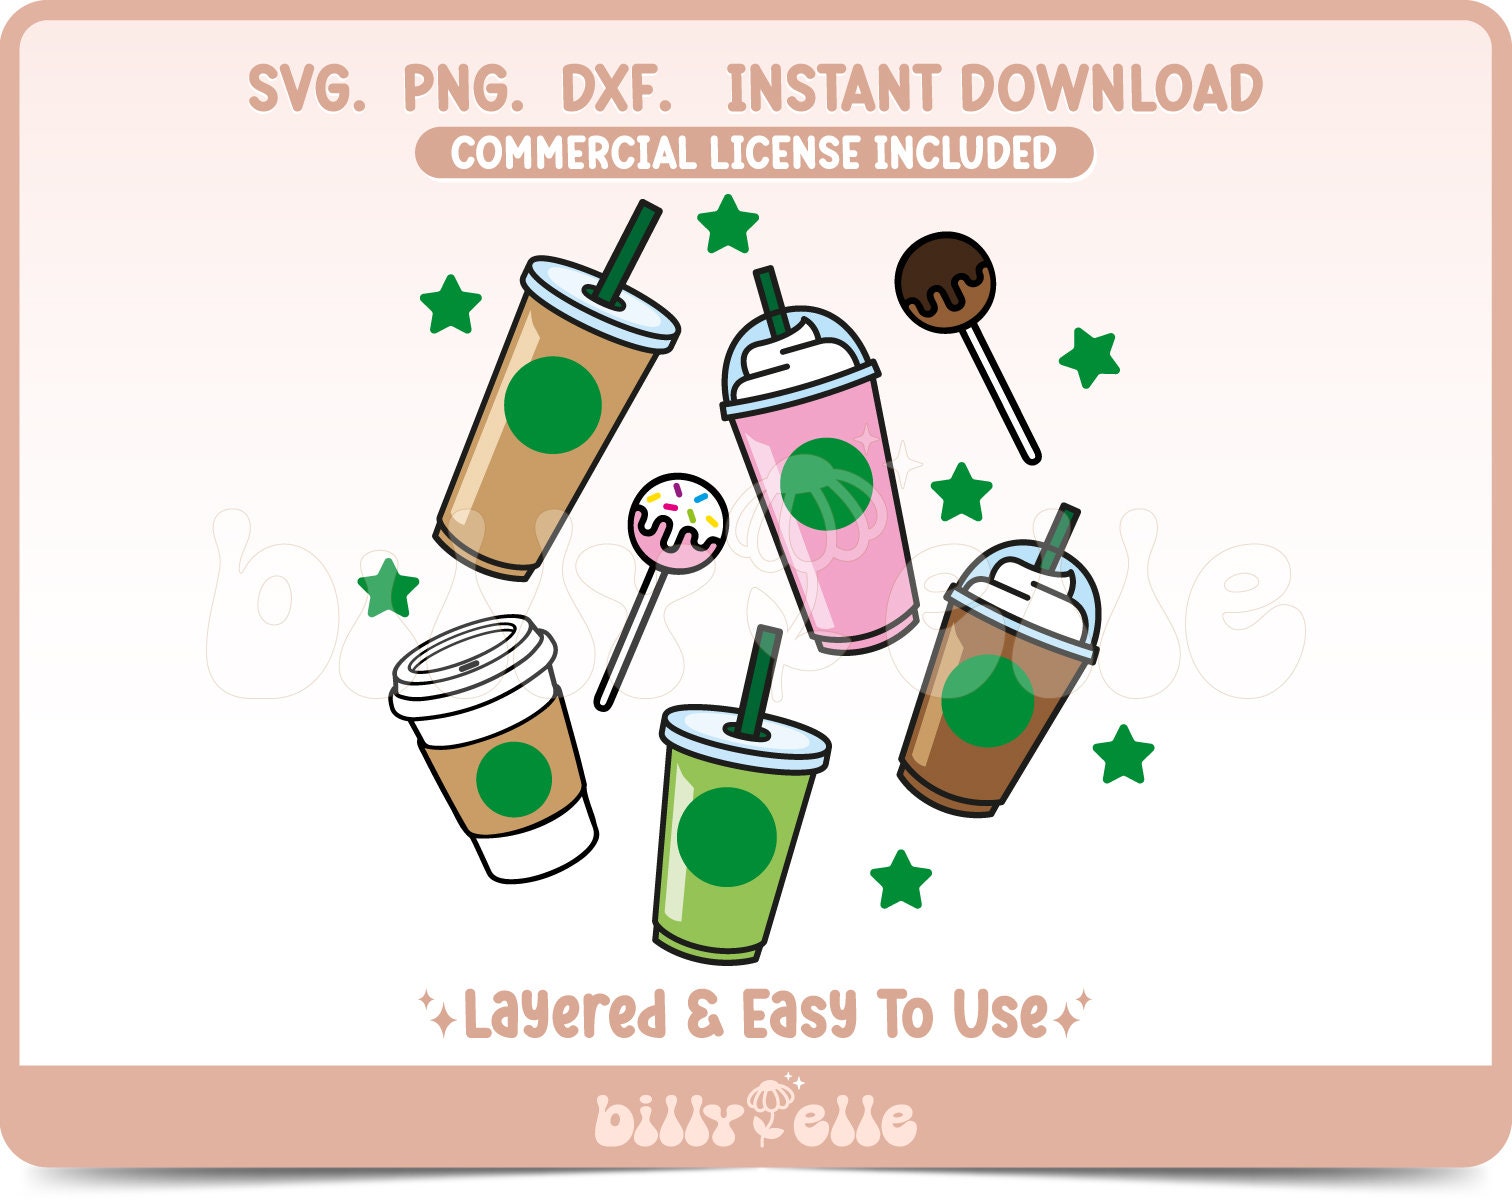 Green Tea Frappuccino Sticker | Starbucks Stickers | Holographic Sticker |  Starbucks Cup | Coffee svg | Latte Sticker | Starbucks SVG